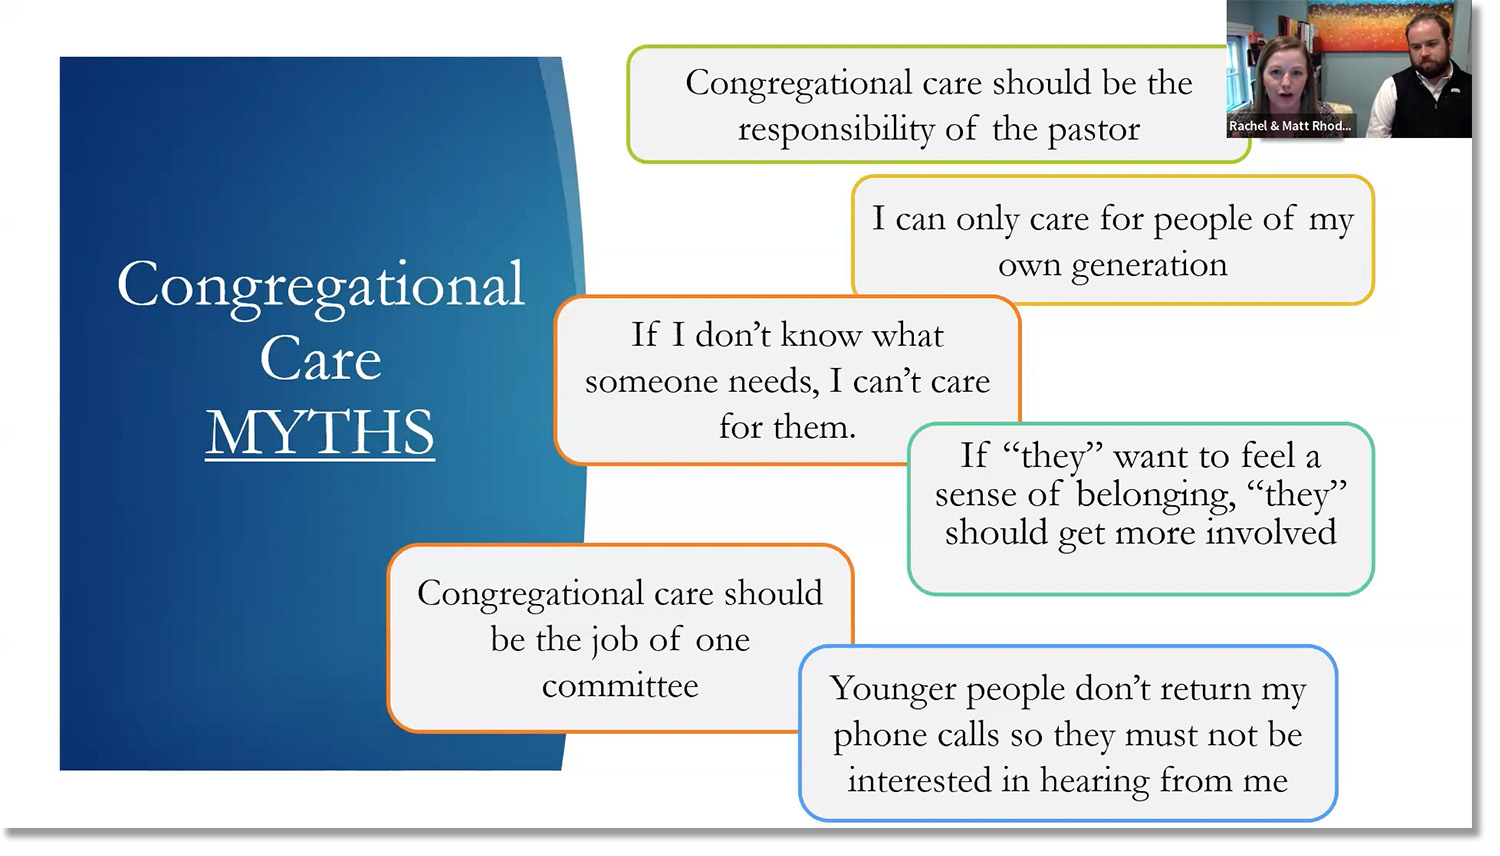 Congregational care myths slide, by Rachel Rhodes.